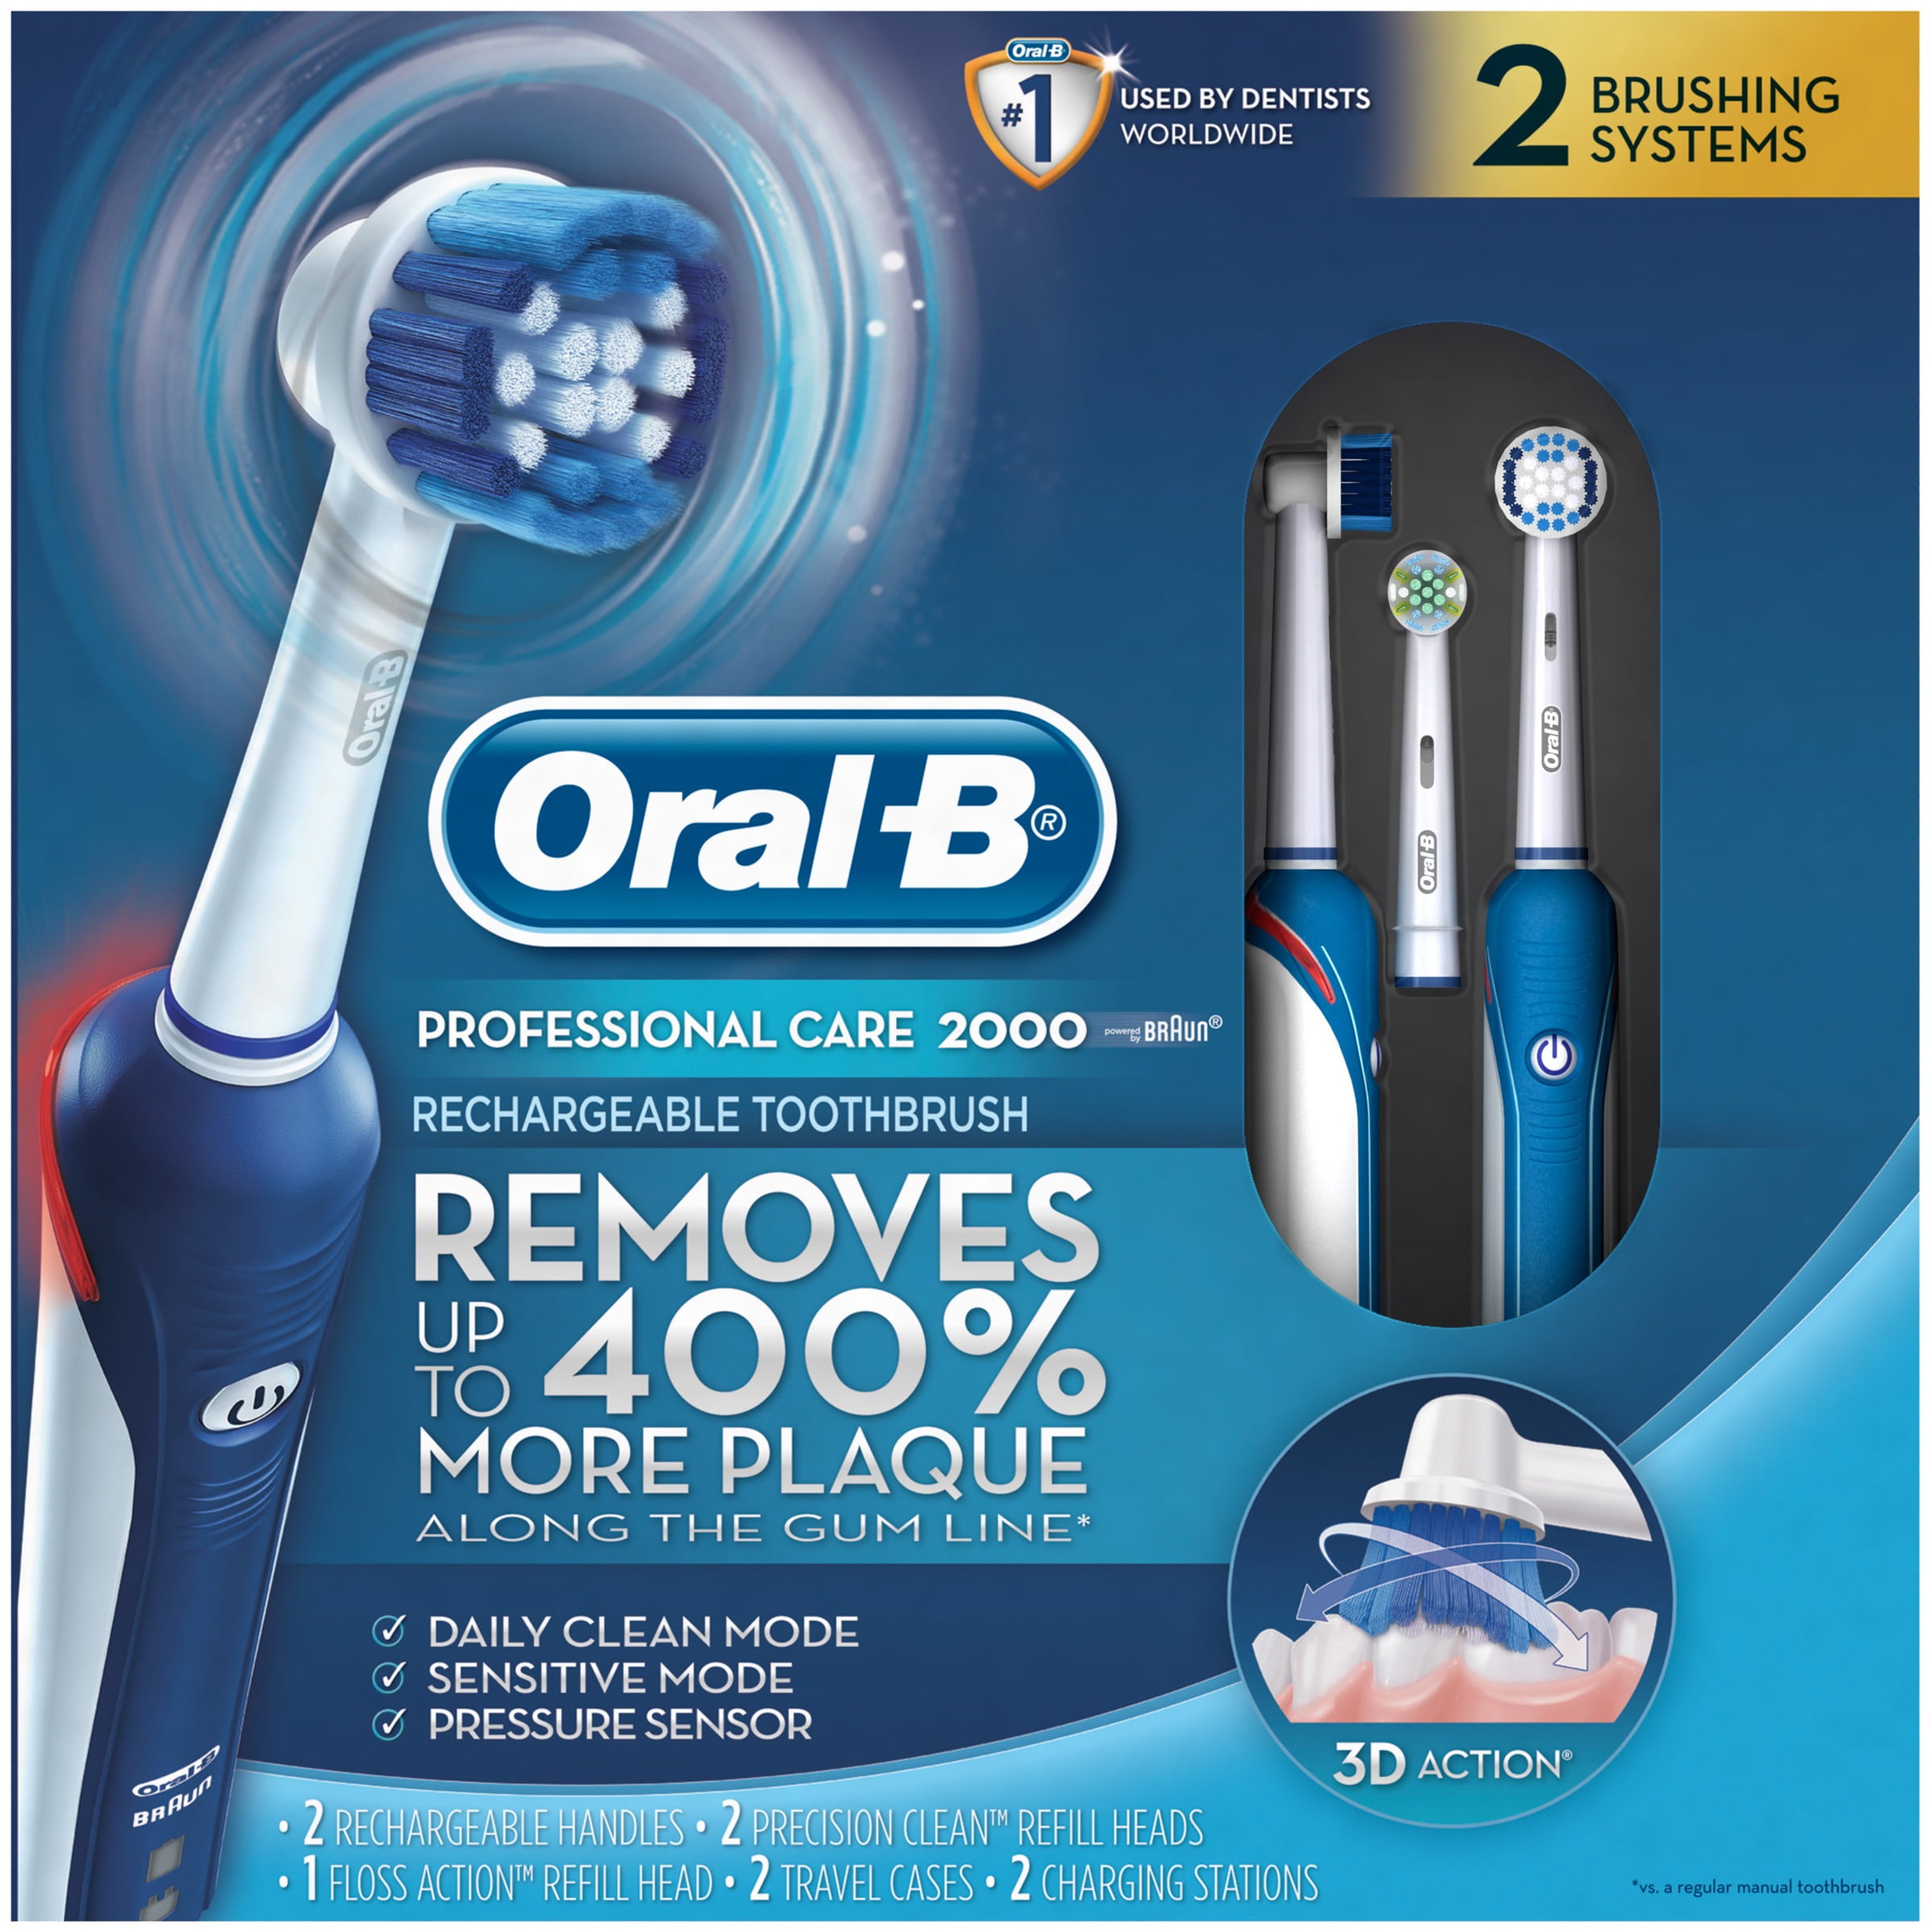 Een goede vriend genoeg Fantasierijk Professional Care Oral-B Professional Care 2000 Rechargeable Toothbrush  with Bonus Refill - Walmart.com